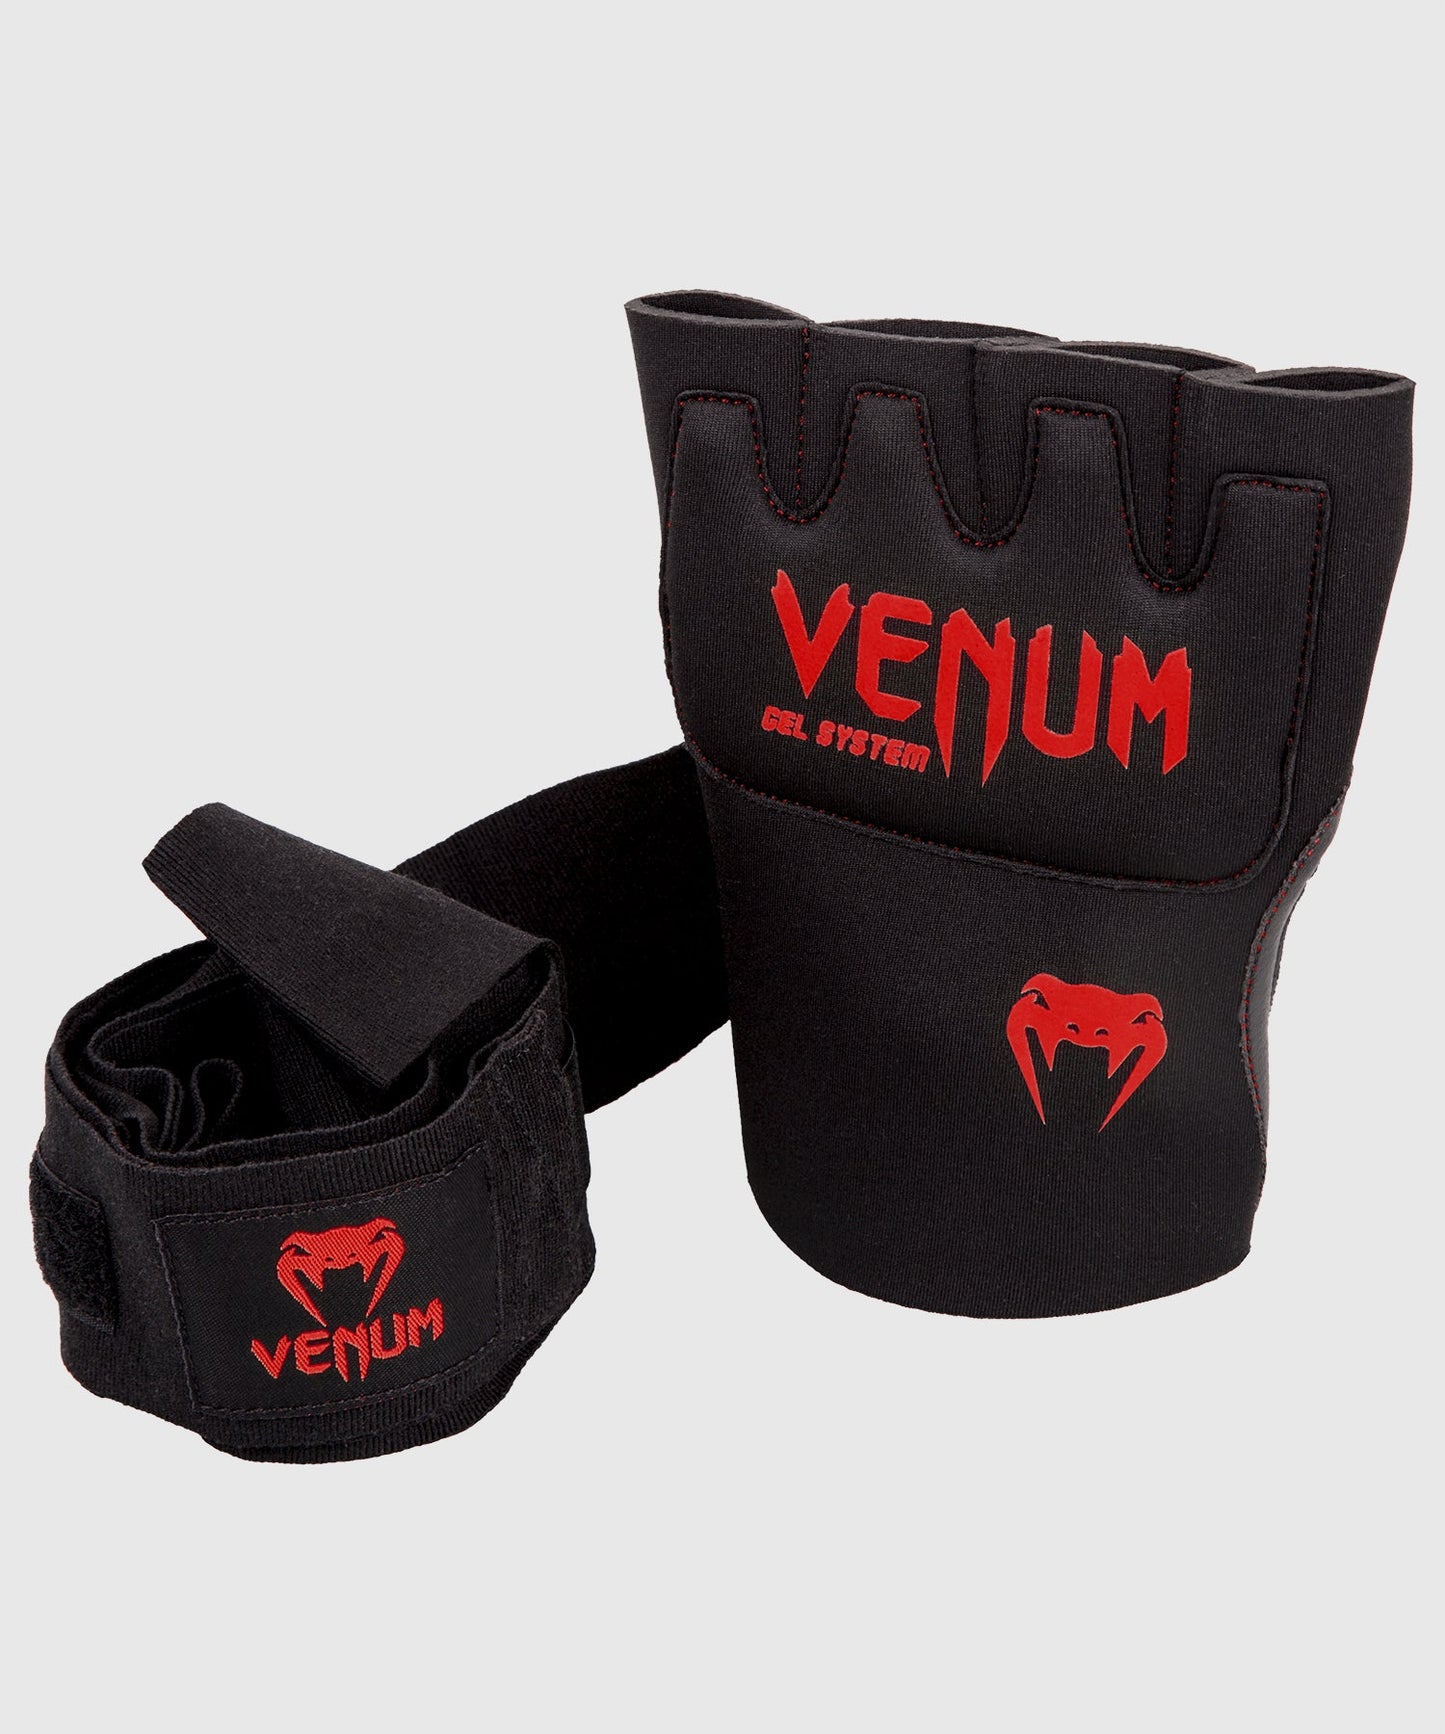 Venum Gel Kontact Quick Wraps - Black/Red